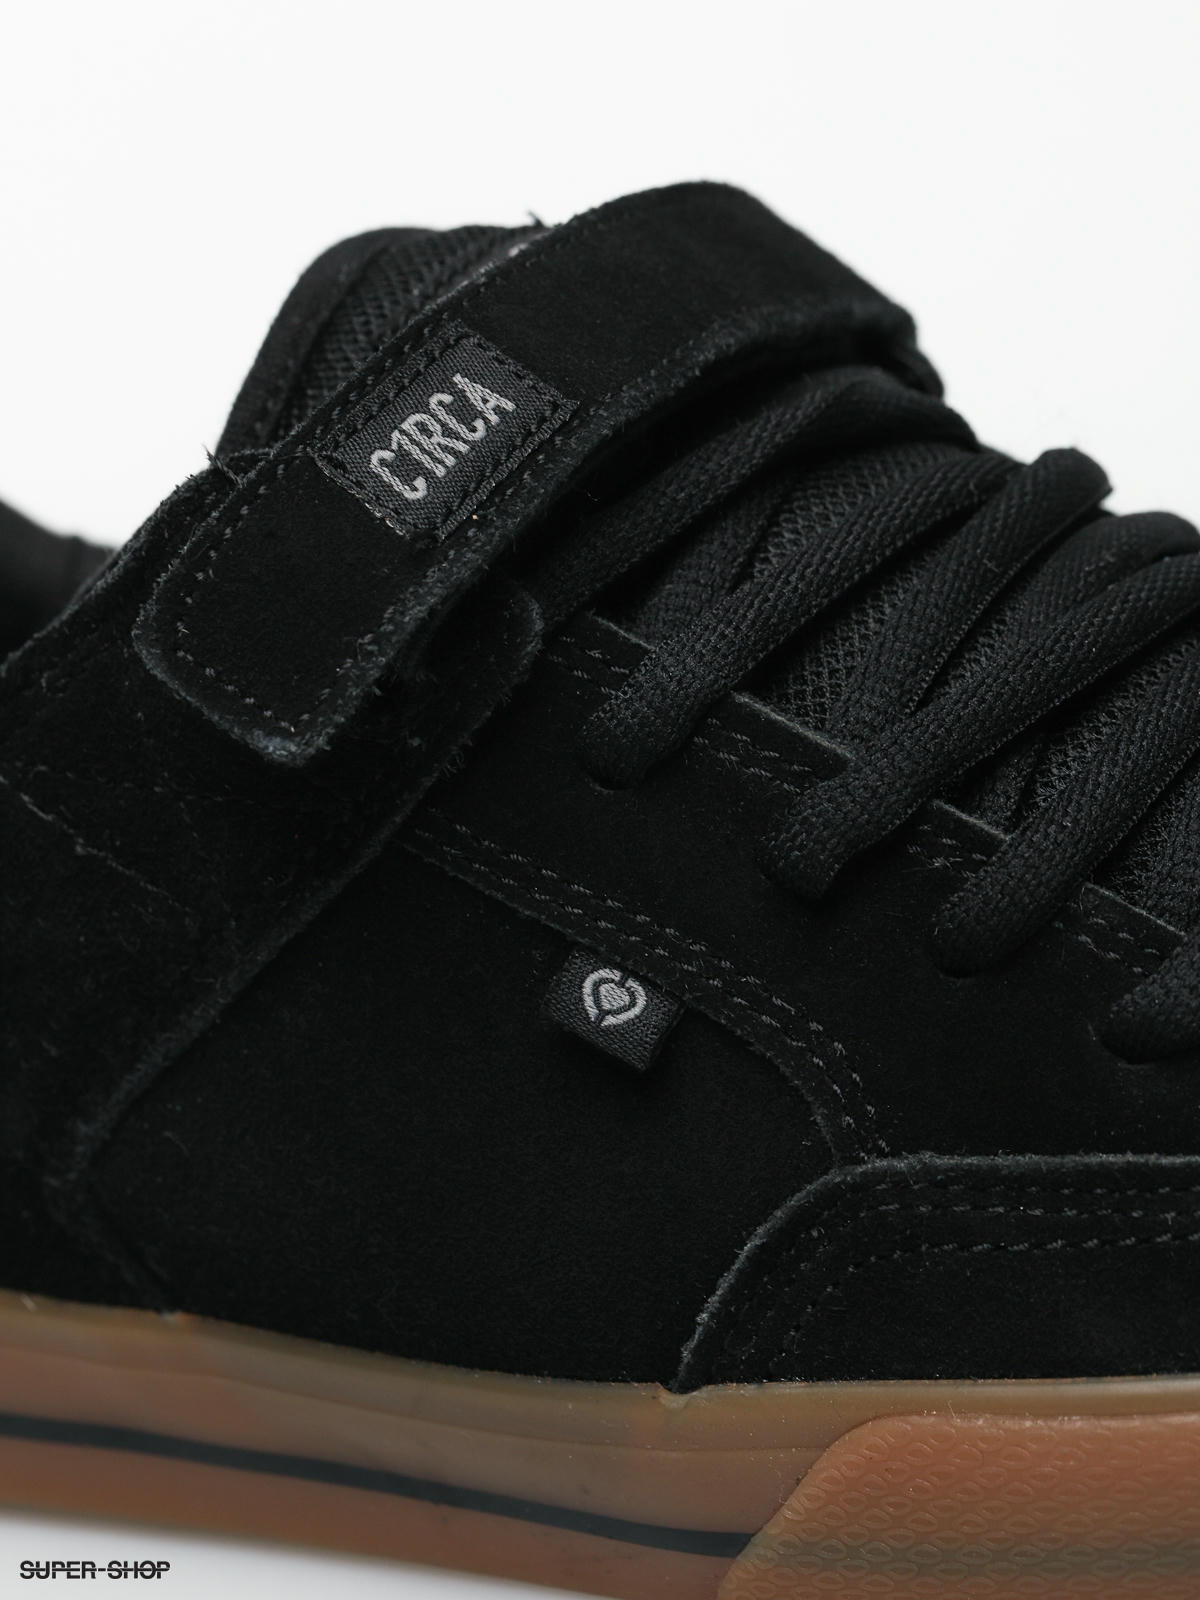 Circa 205 Vulc Shoes (black/gum)